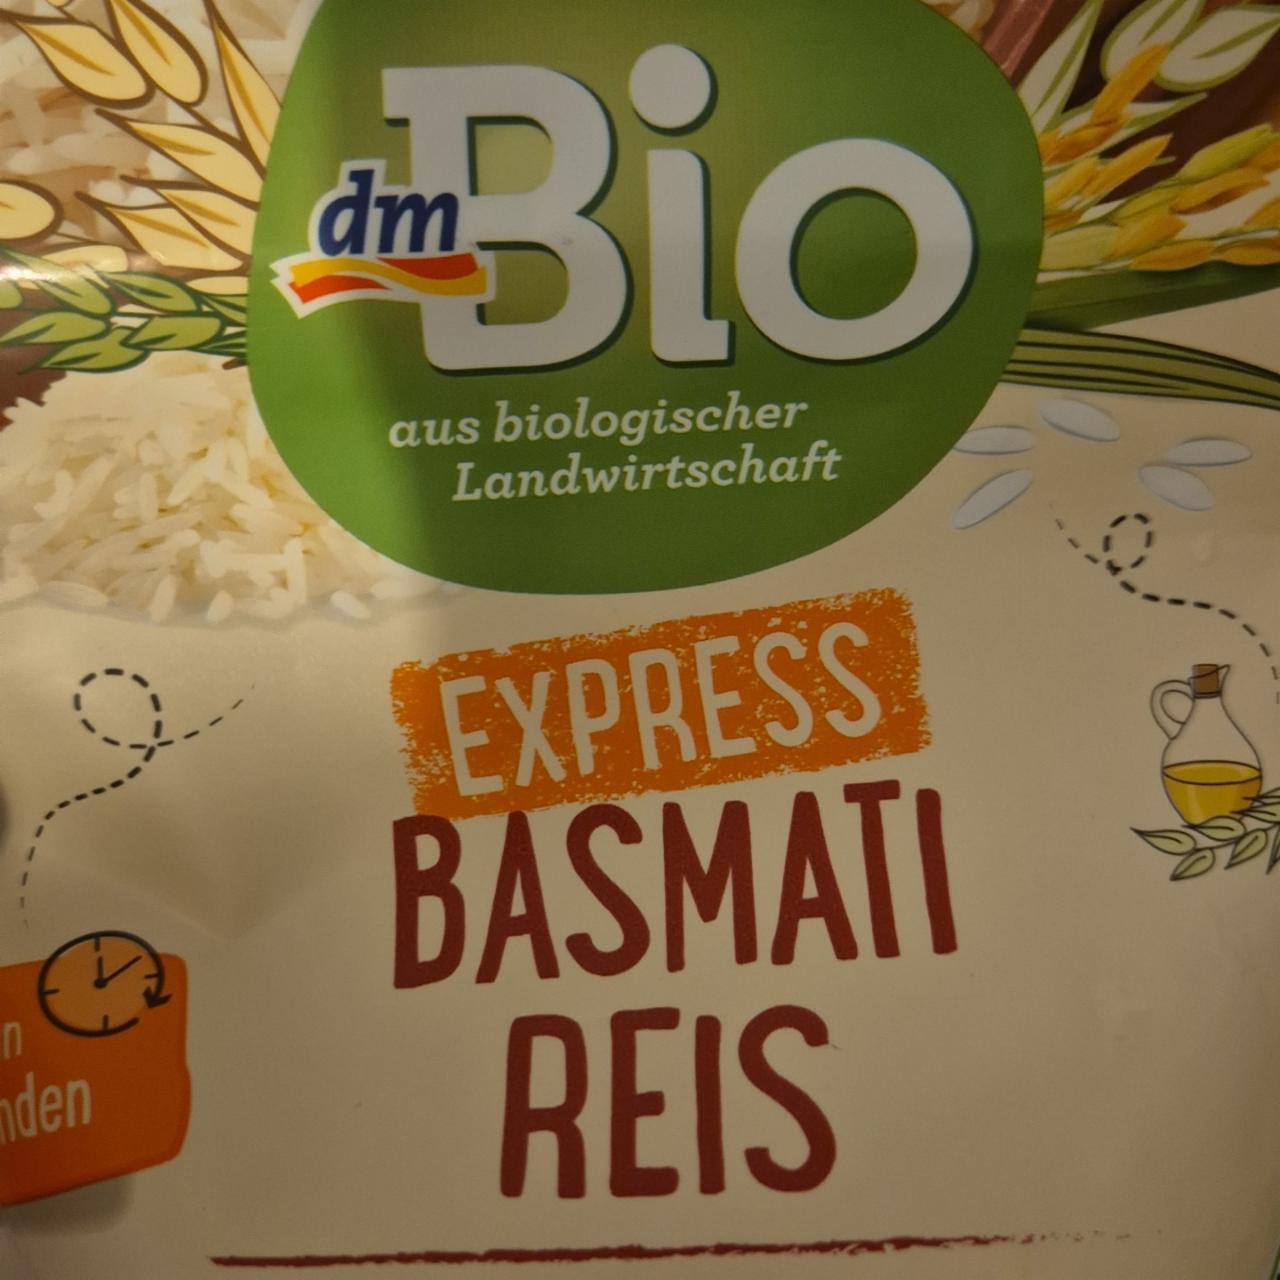 Képek - Express basmati rizs dmBio